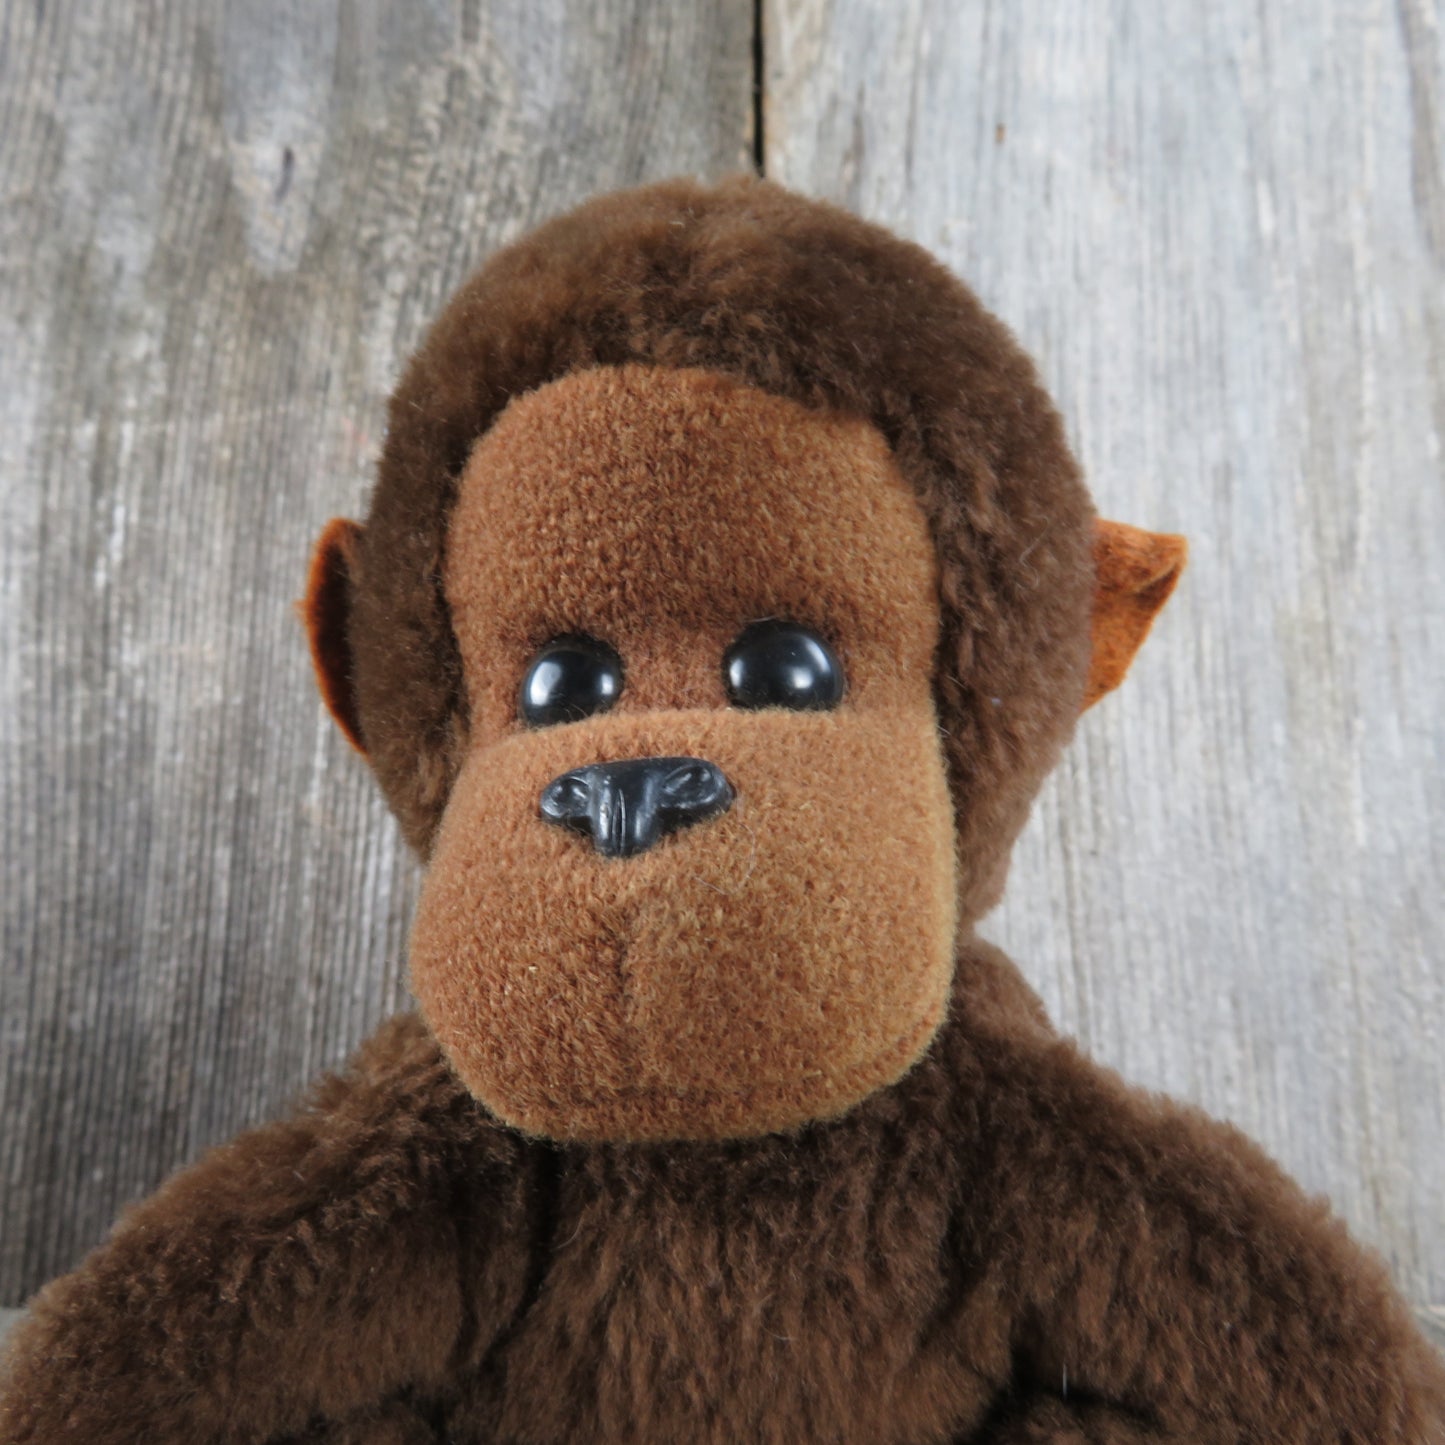 Vintage Gorilla Plush Dakin Monkey Chimp Chimpanzee Stuffed Animal Toy Doll 1981 - At Grandma's Table